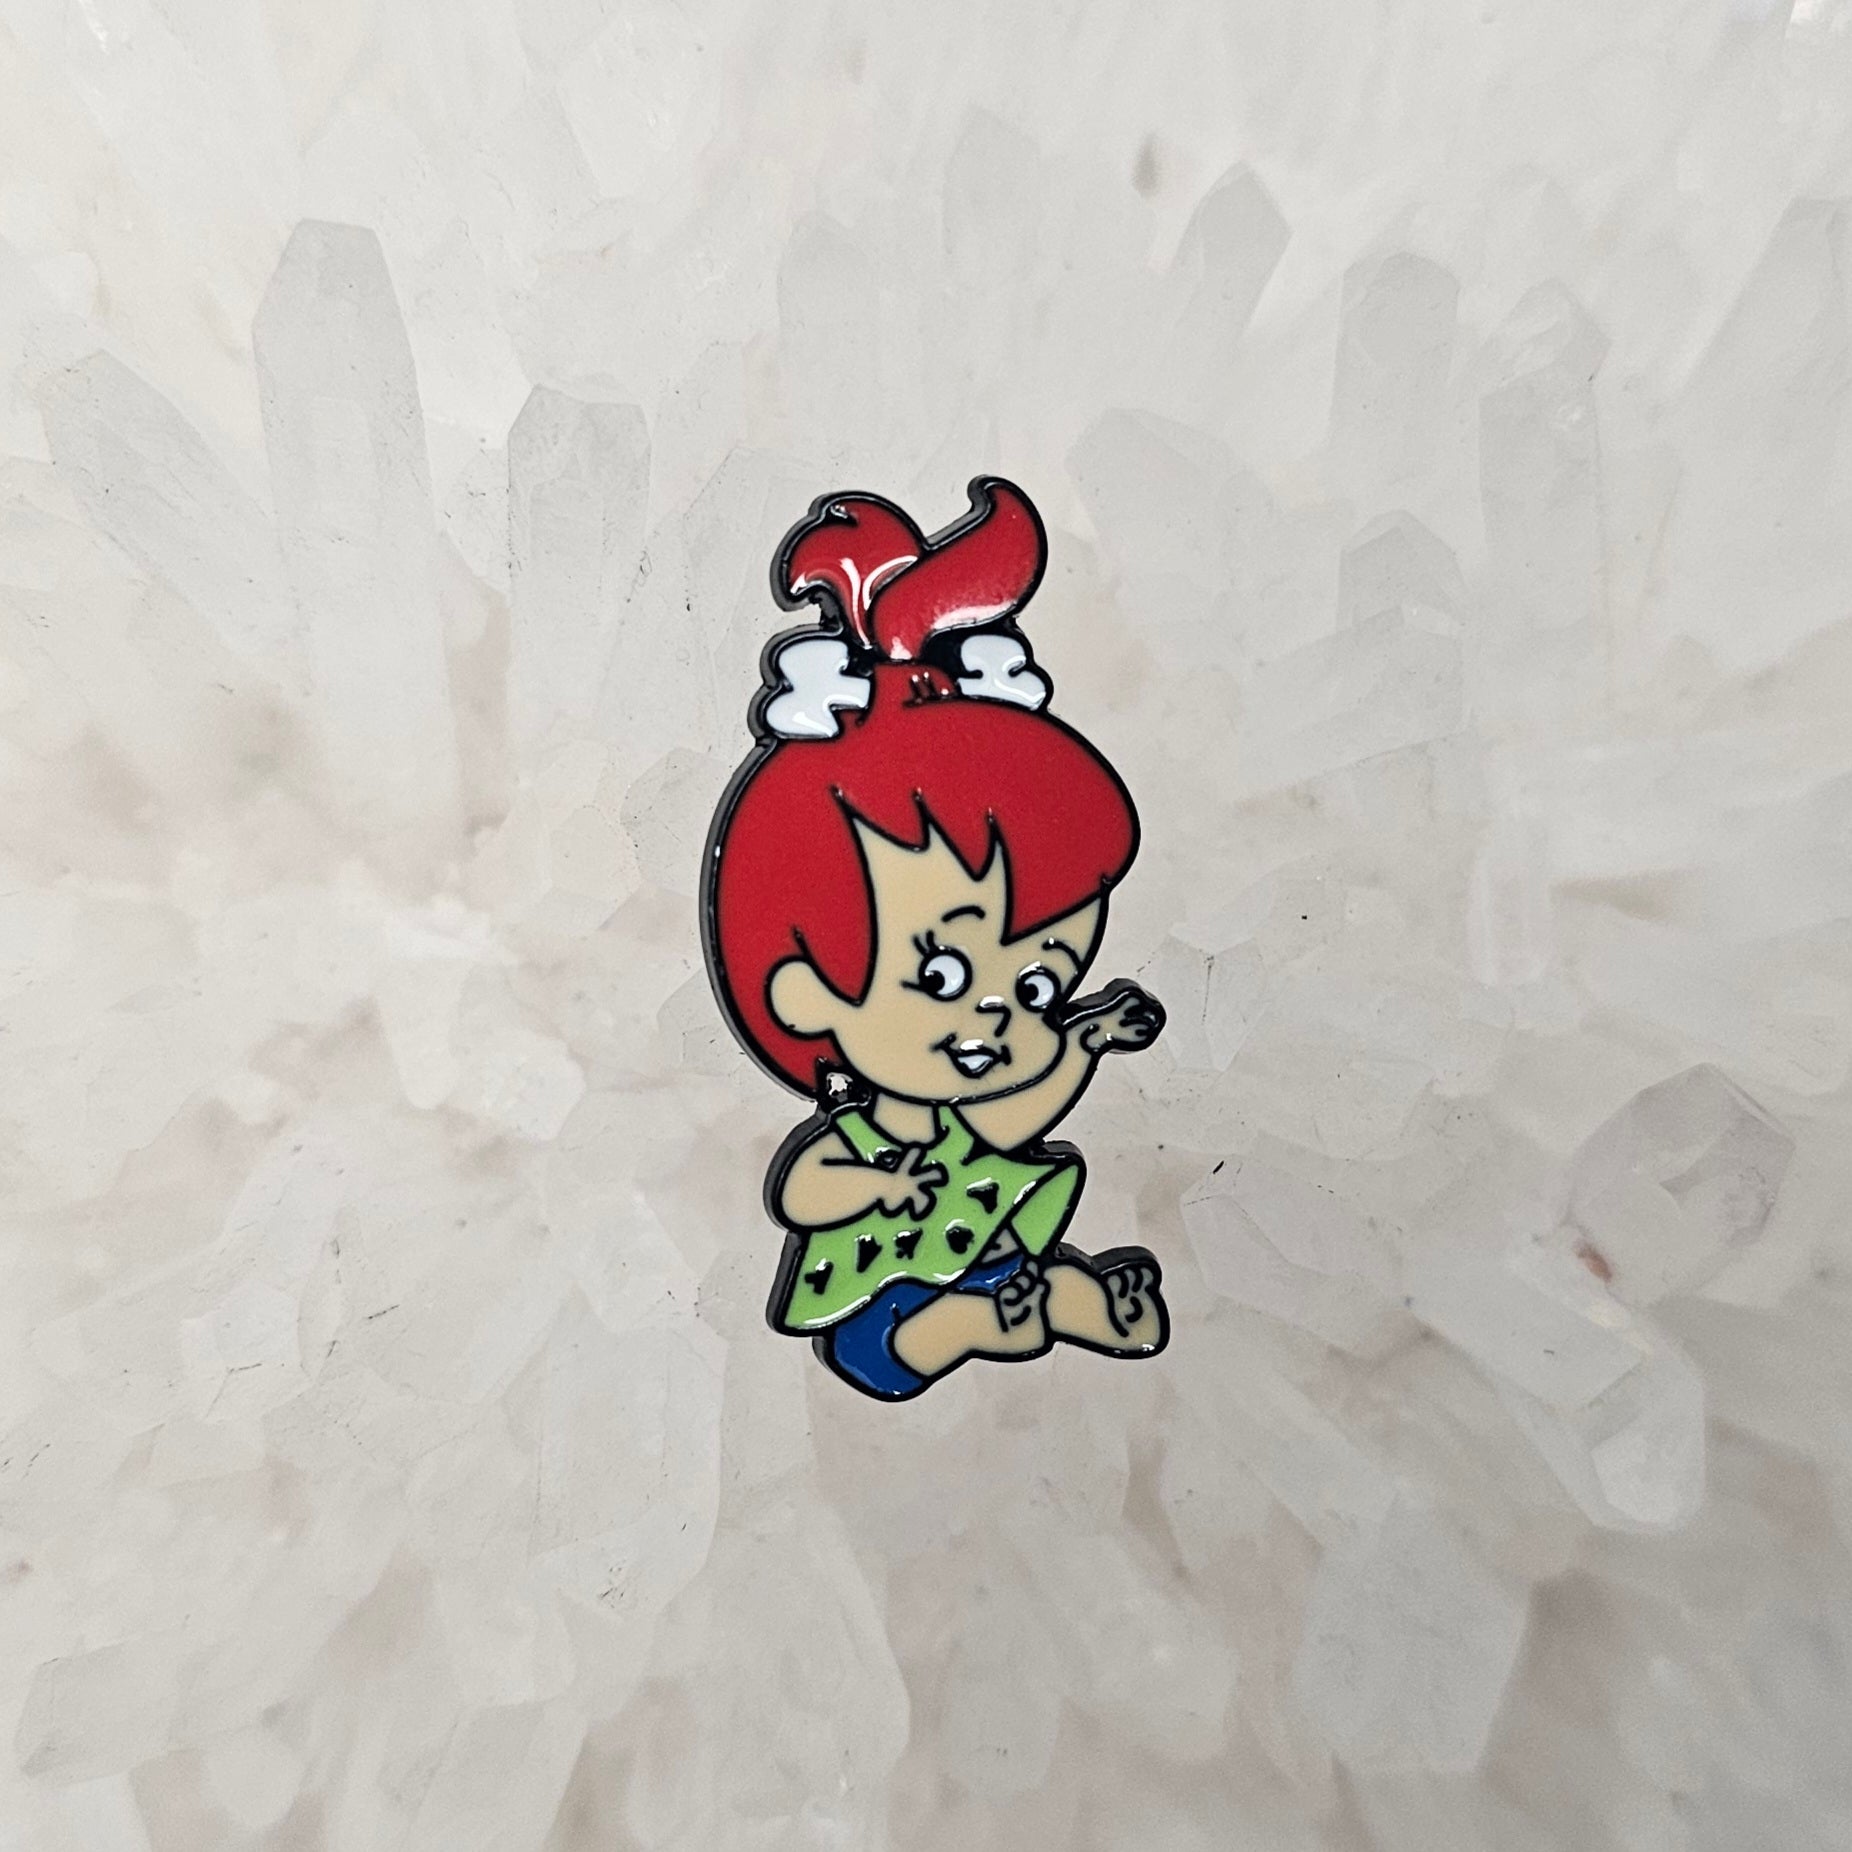 Pebbles Flintstones Kid Classic Cartoon Enamel Pins Hat Pins Lapel Pin Brooch Badge Festival Pin